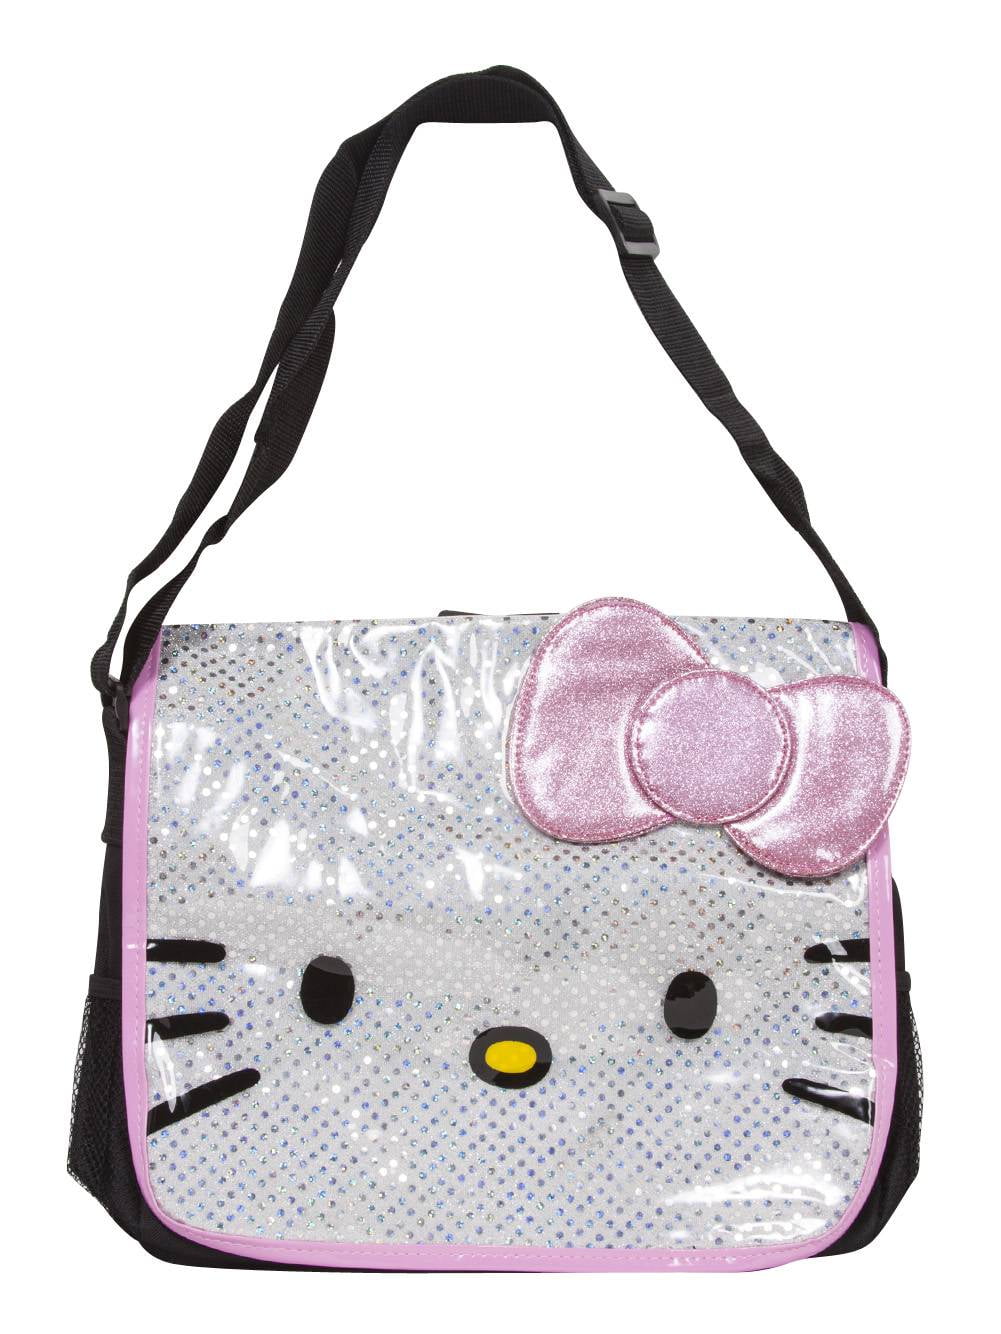 Sanrio hello kitty PU retro cute new messenger bag shoulder bag